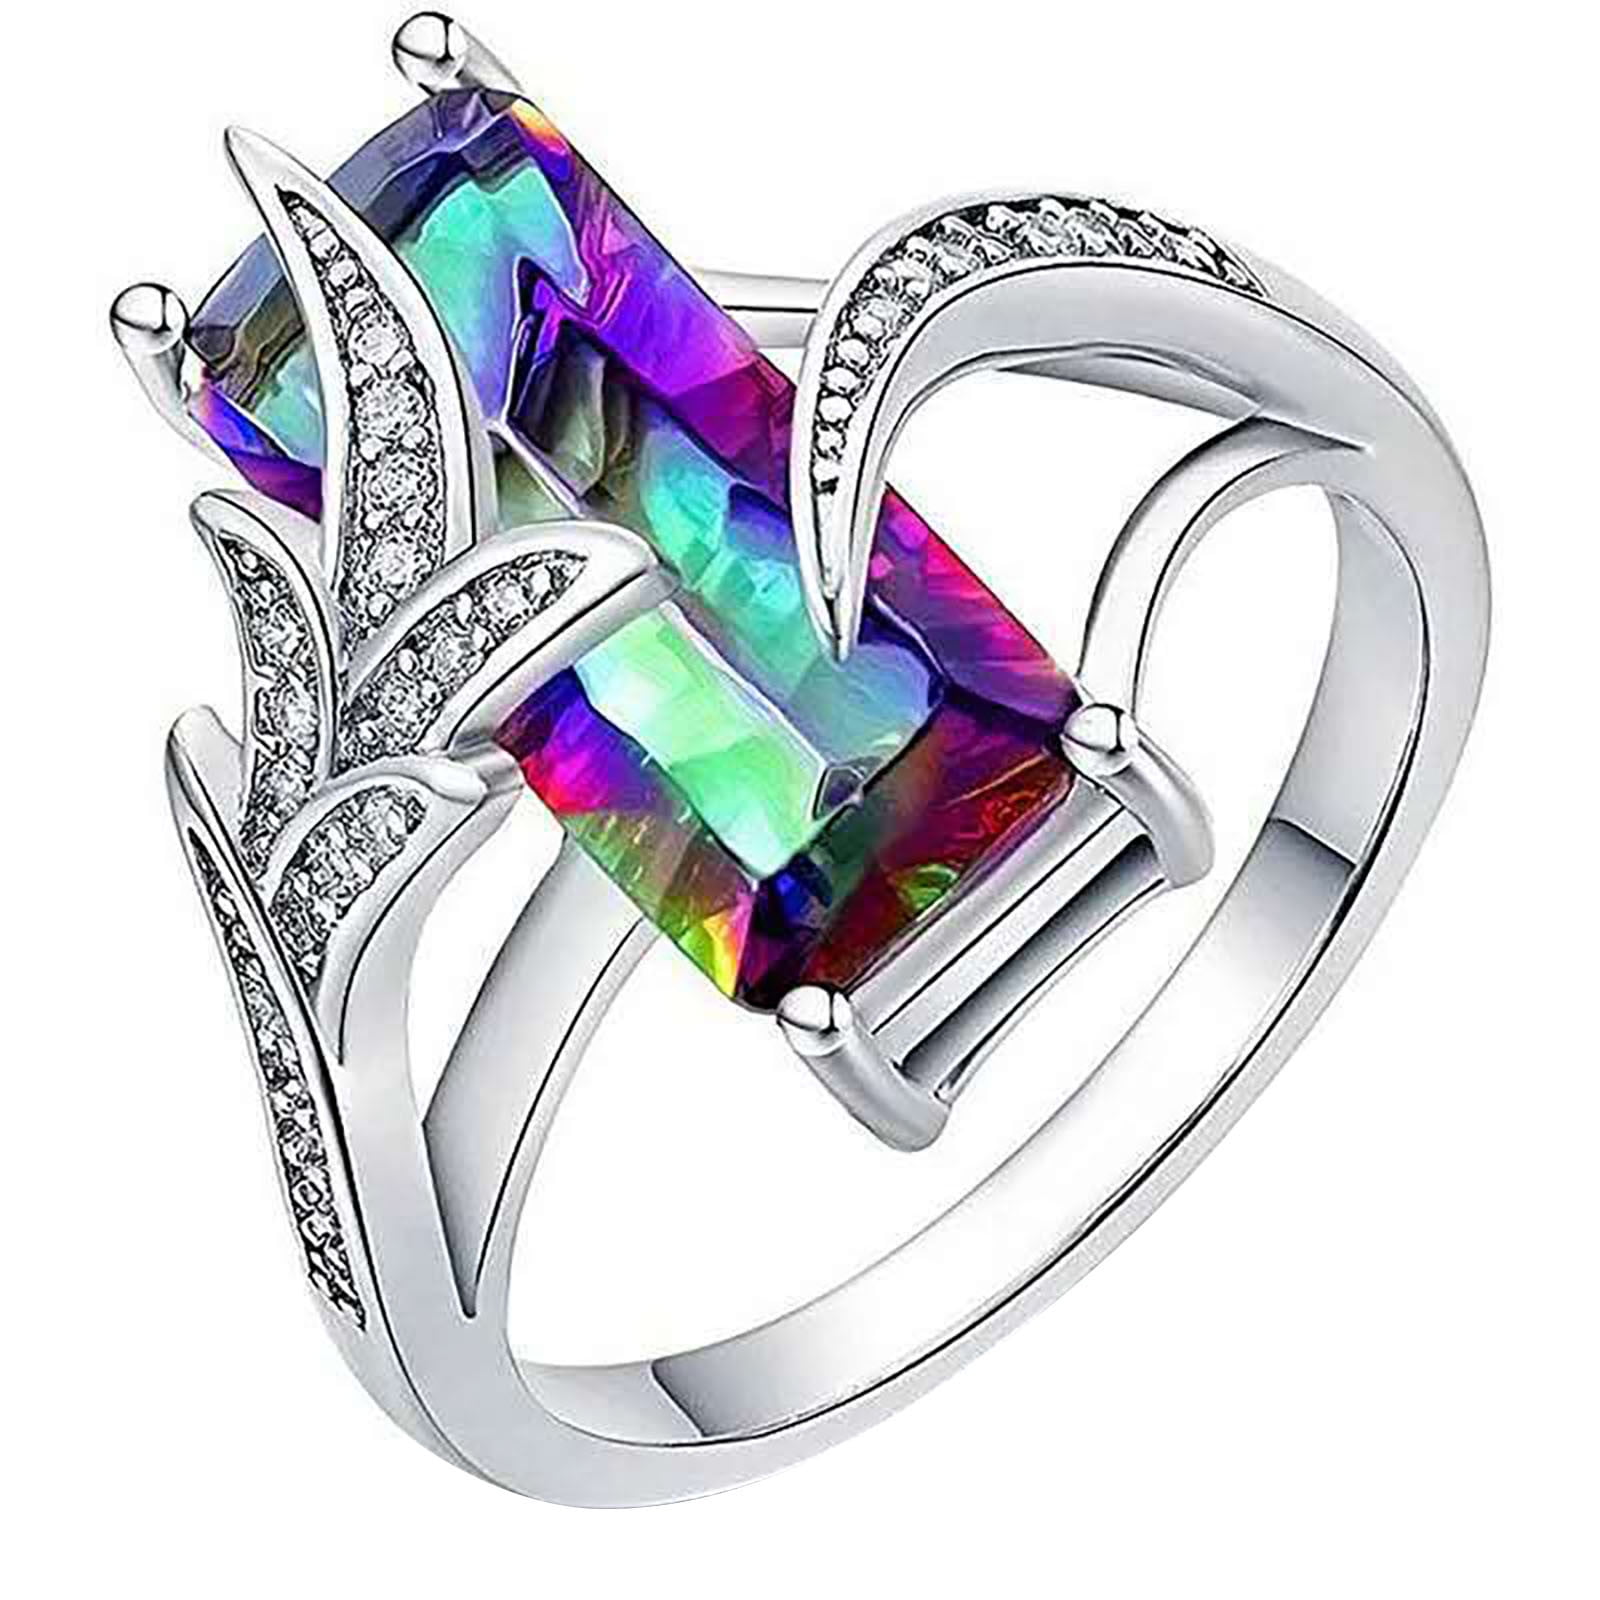 Copper Fashion Zircon Women Wedding Jewelry Simple Ring Size 6-10 